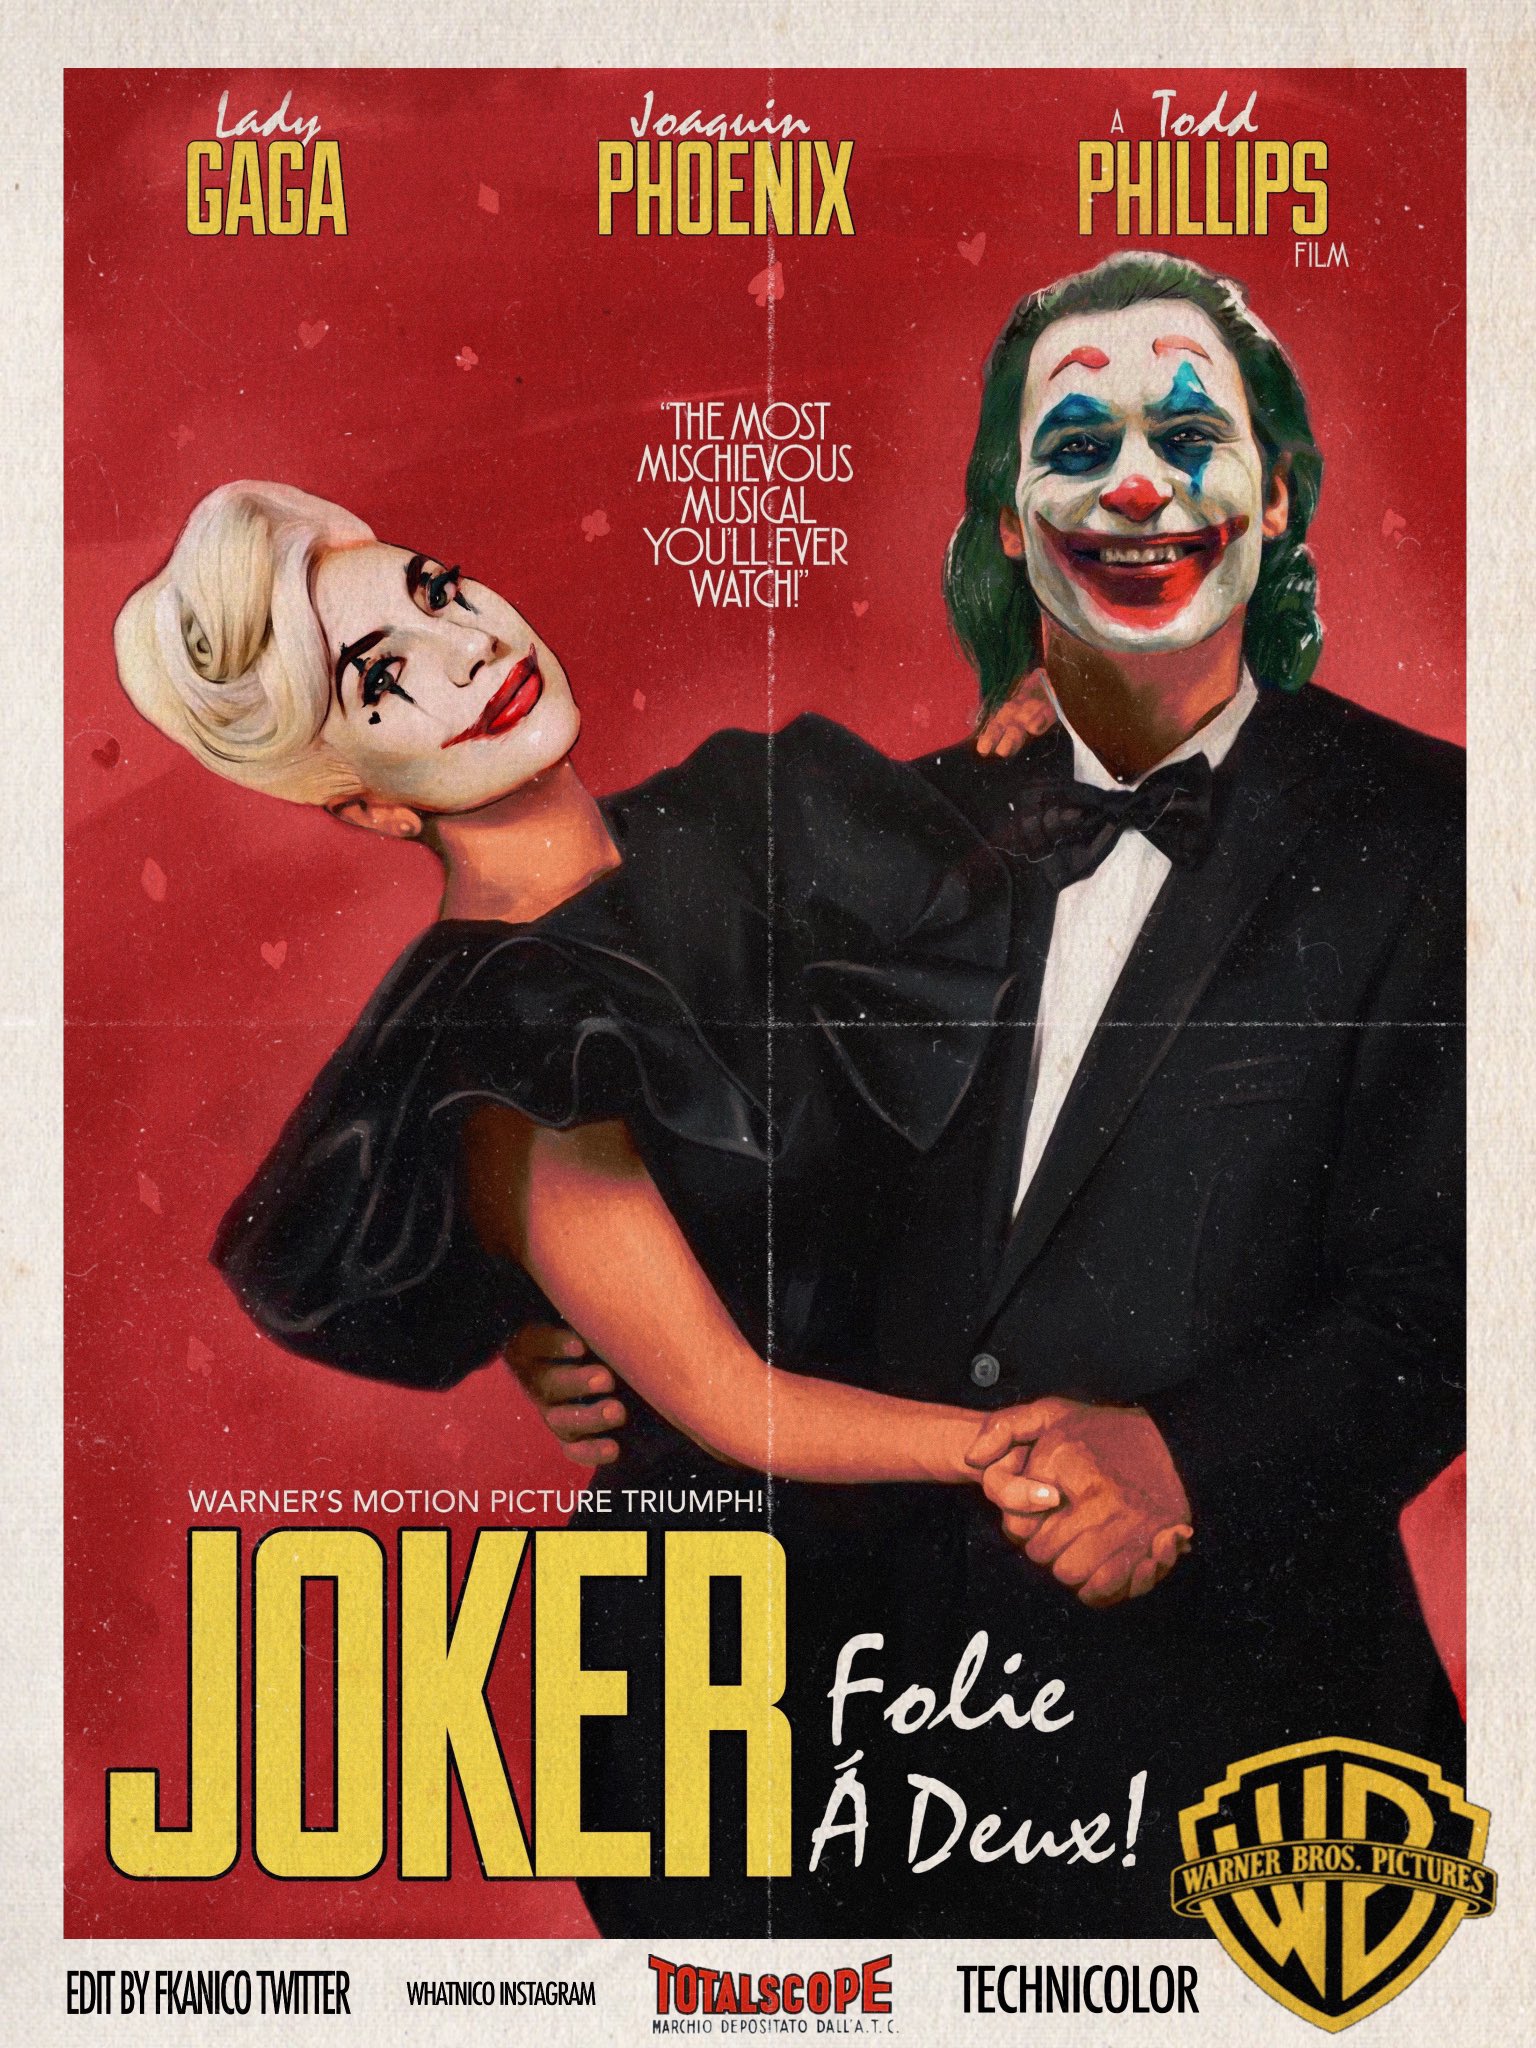 Joker vintage Movie Poster